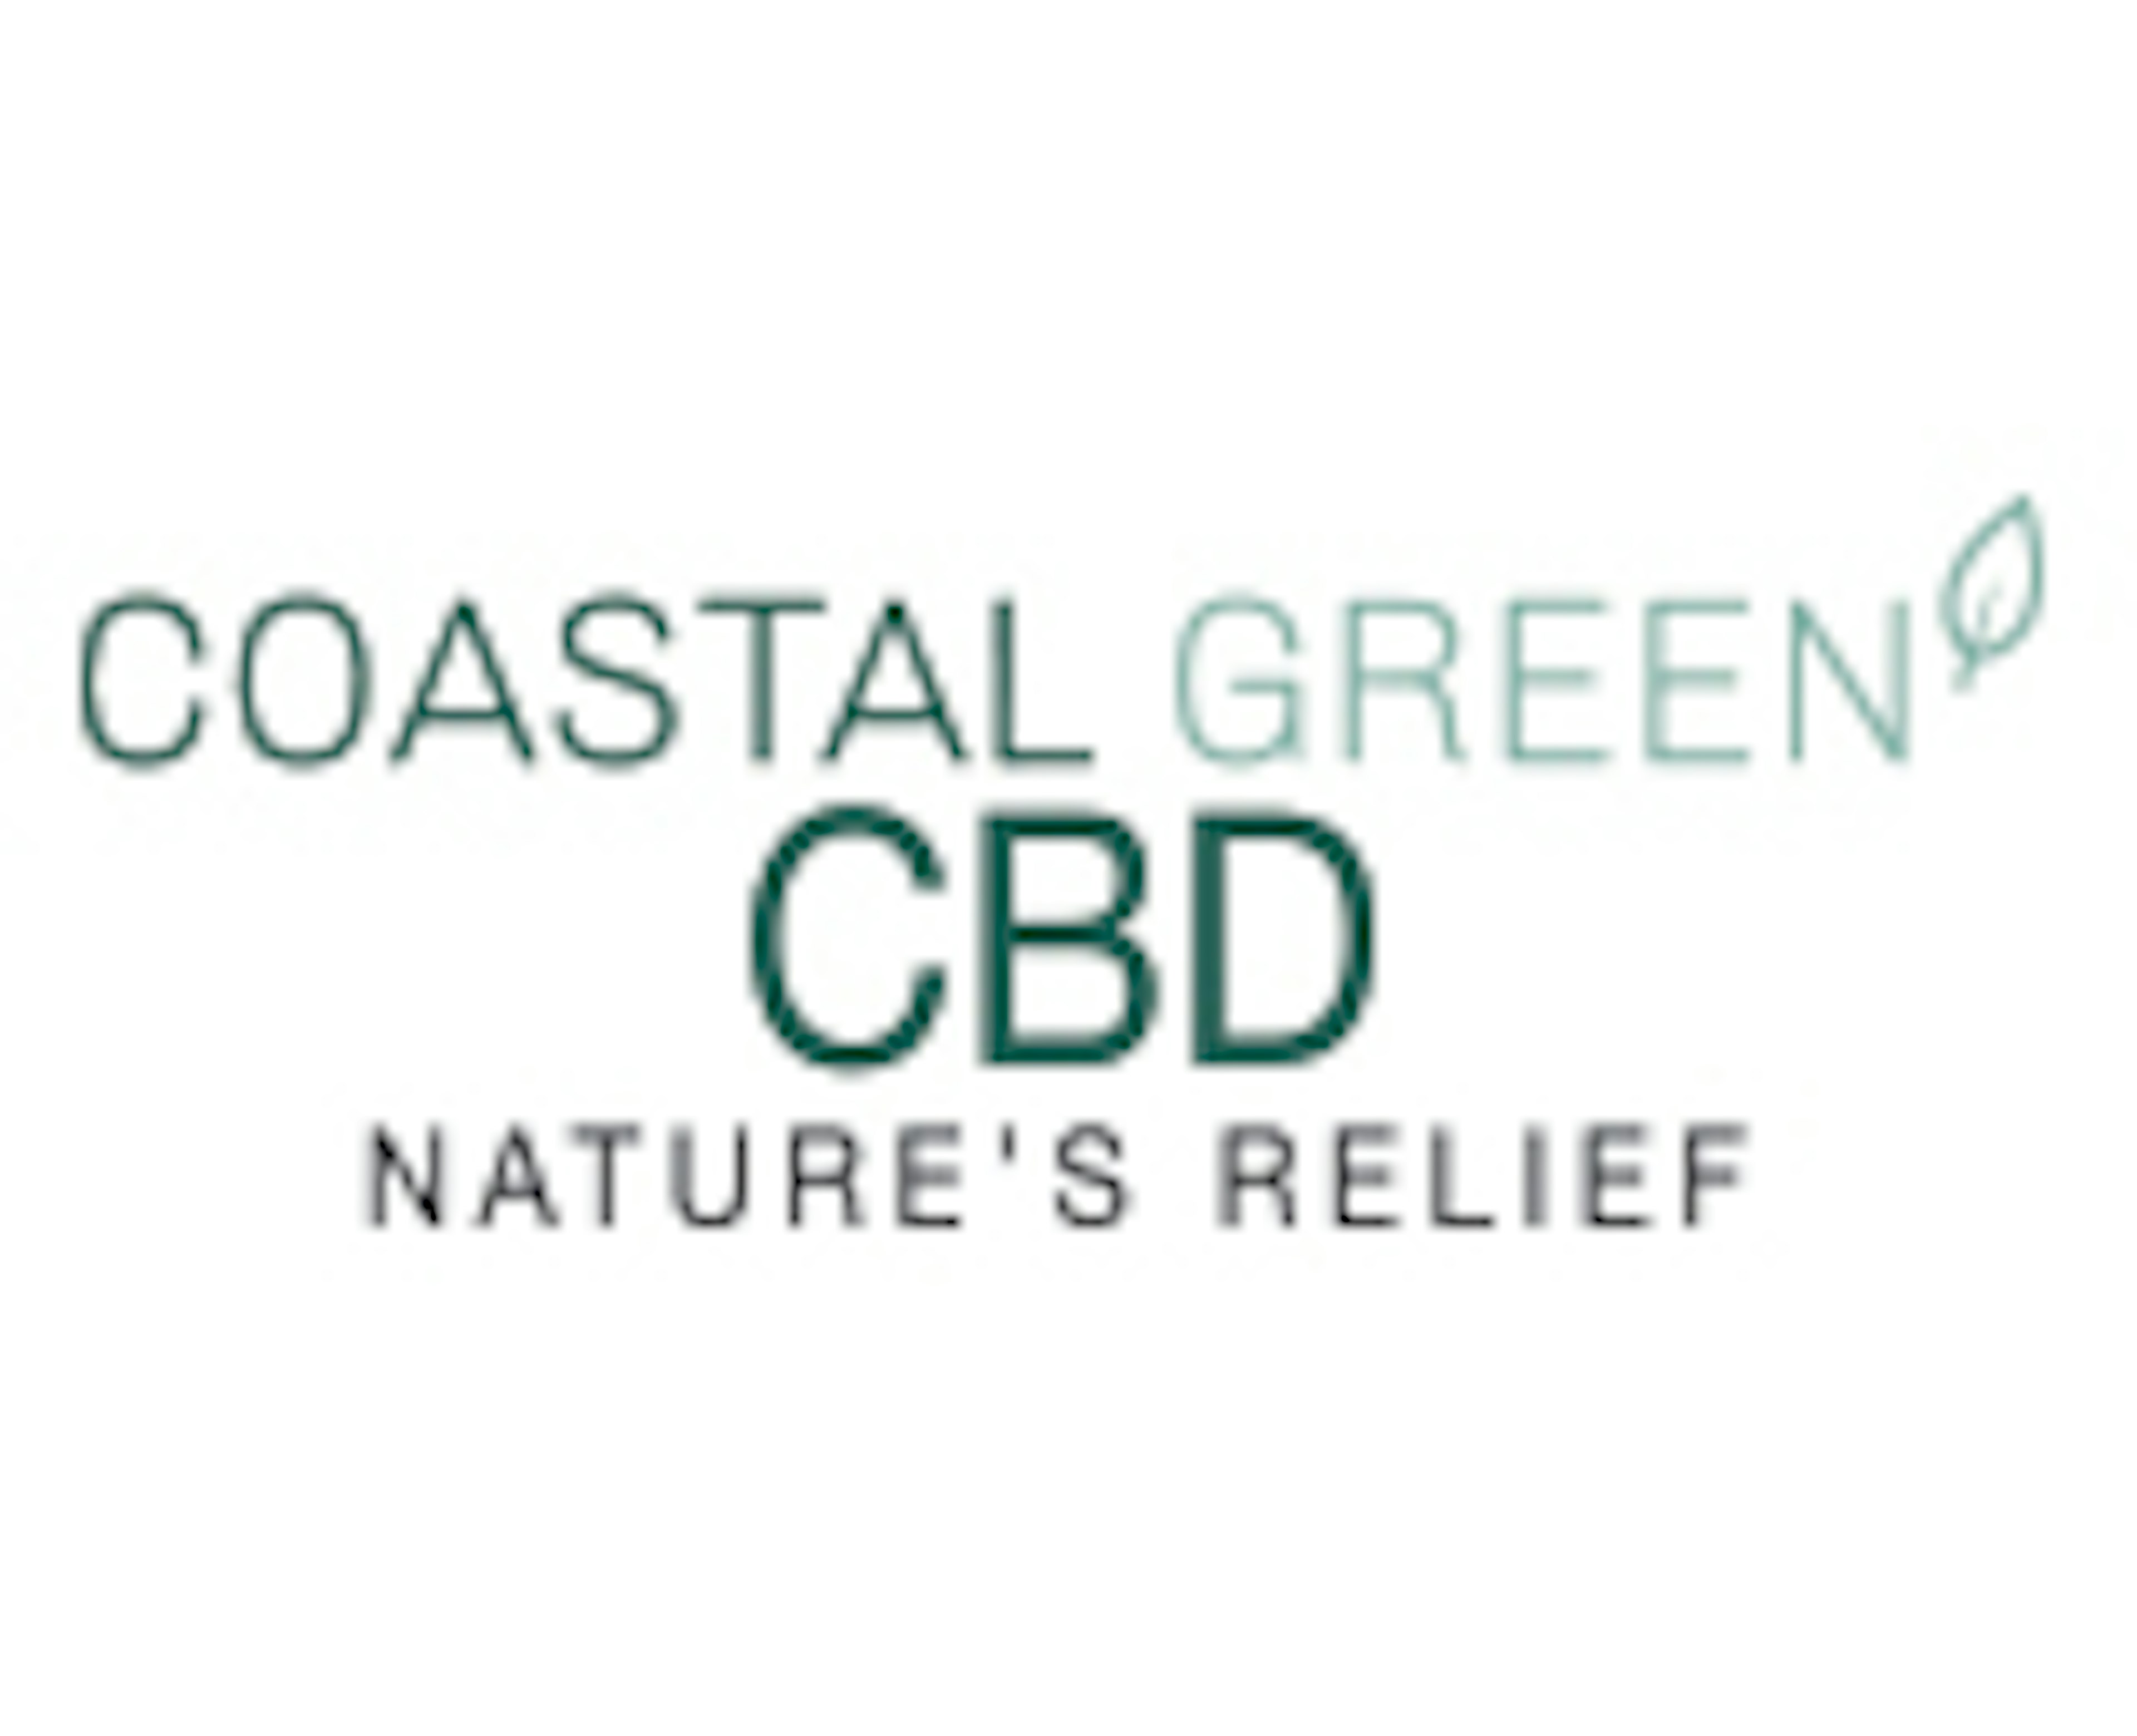 Coastal Green CBD